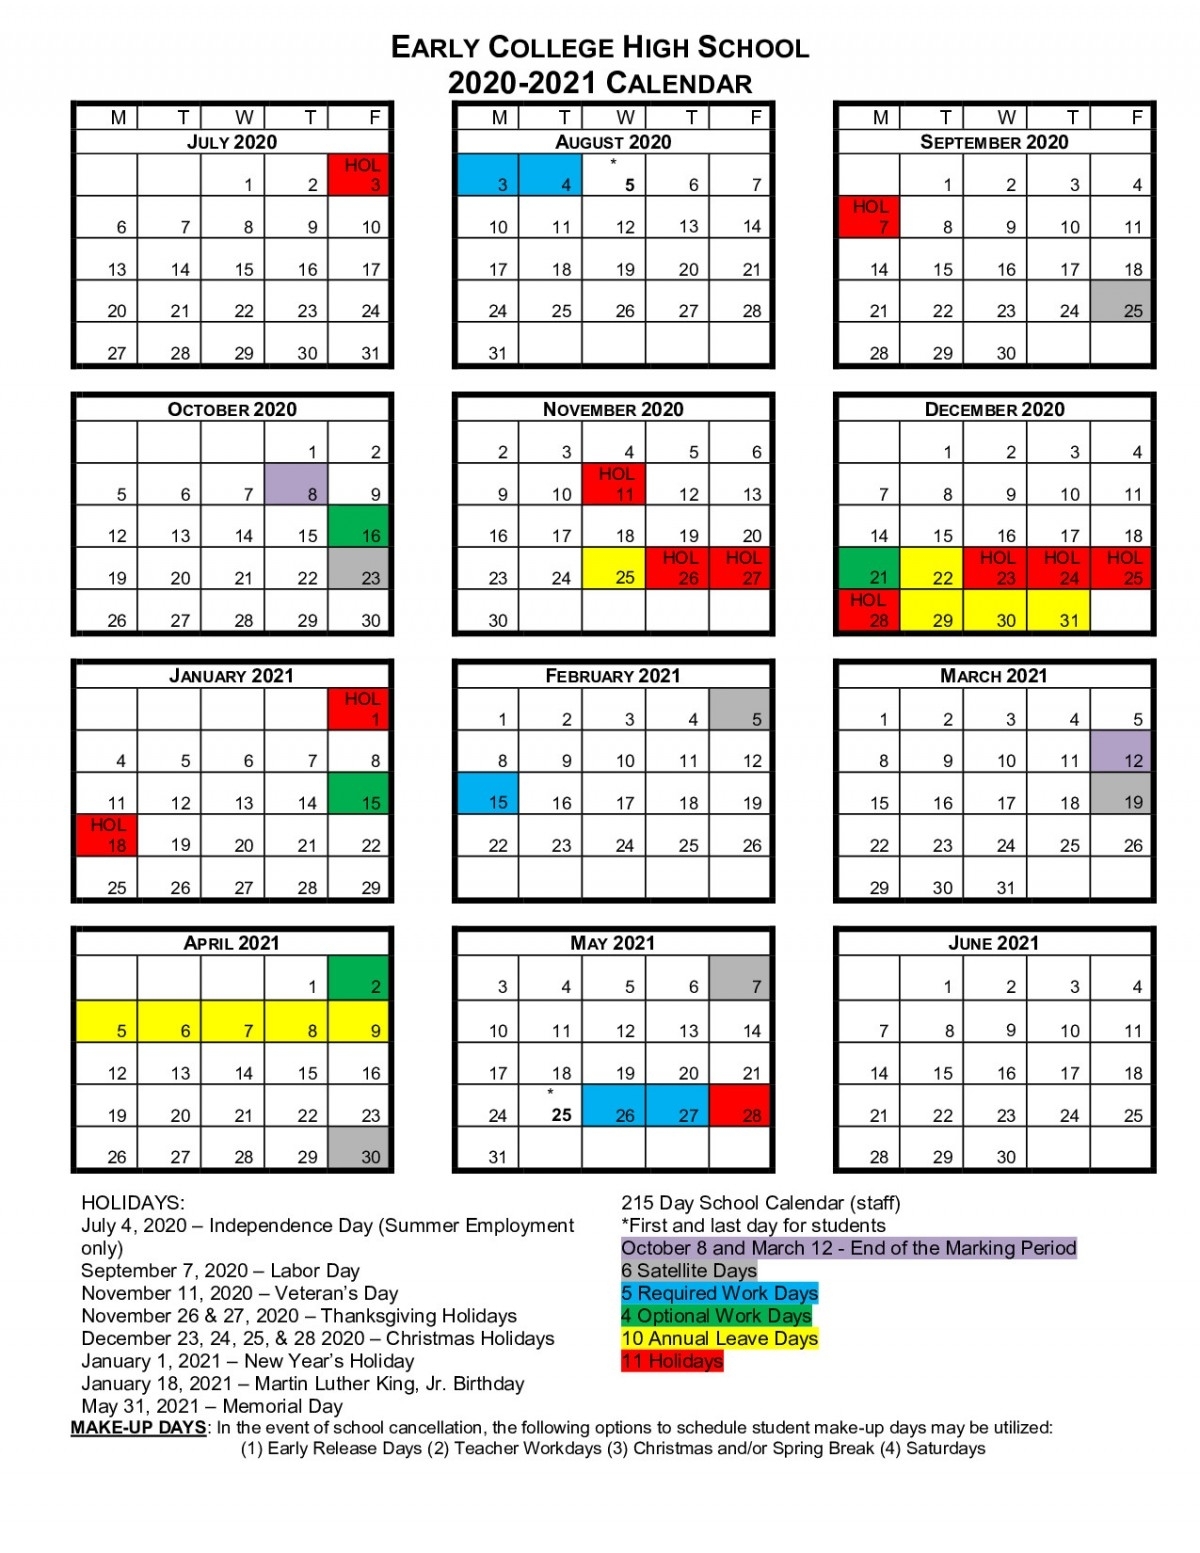 Bcs School Calendars | Beaufort County Schools